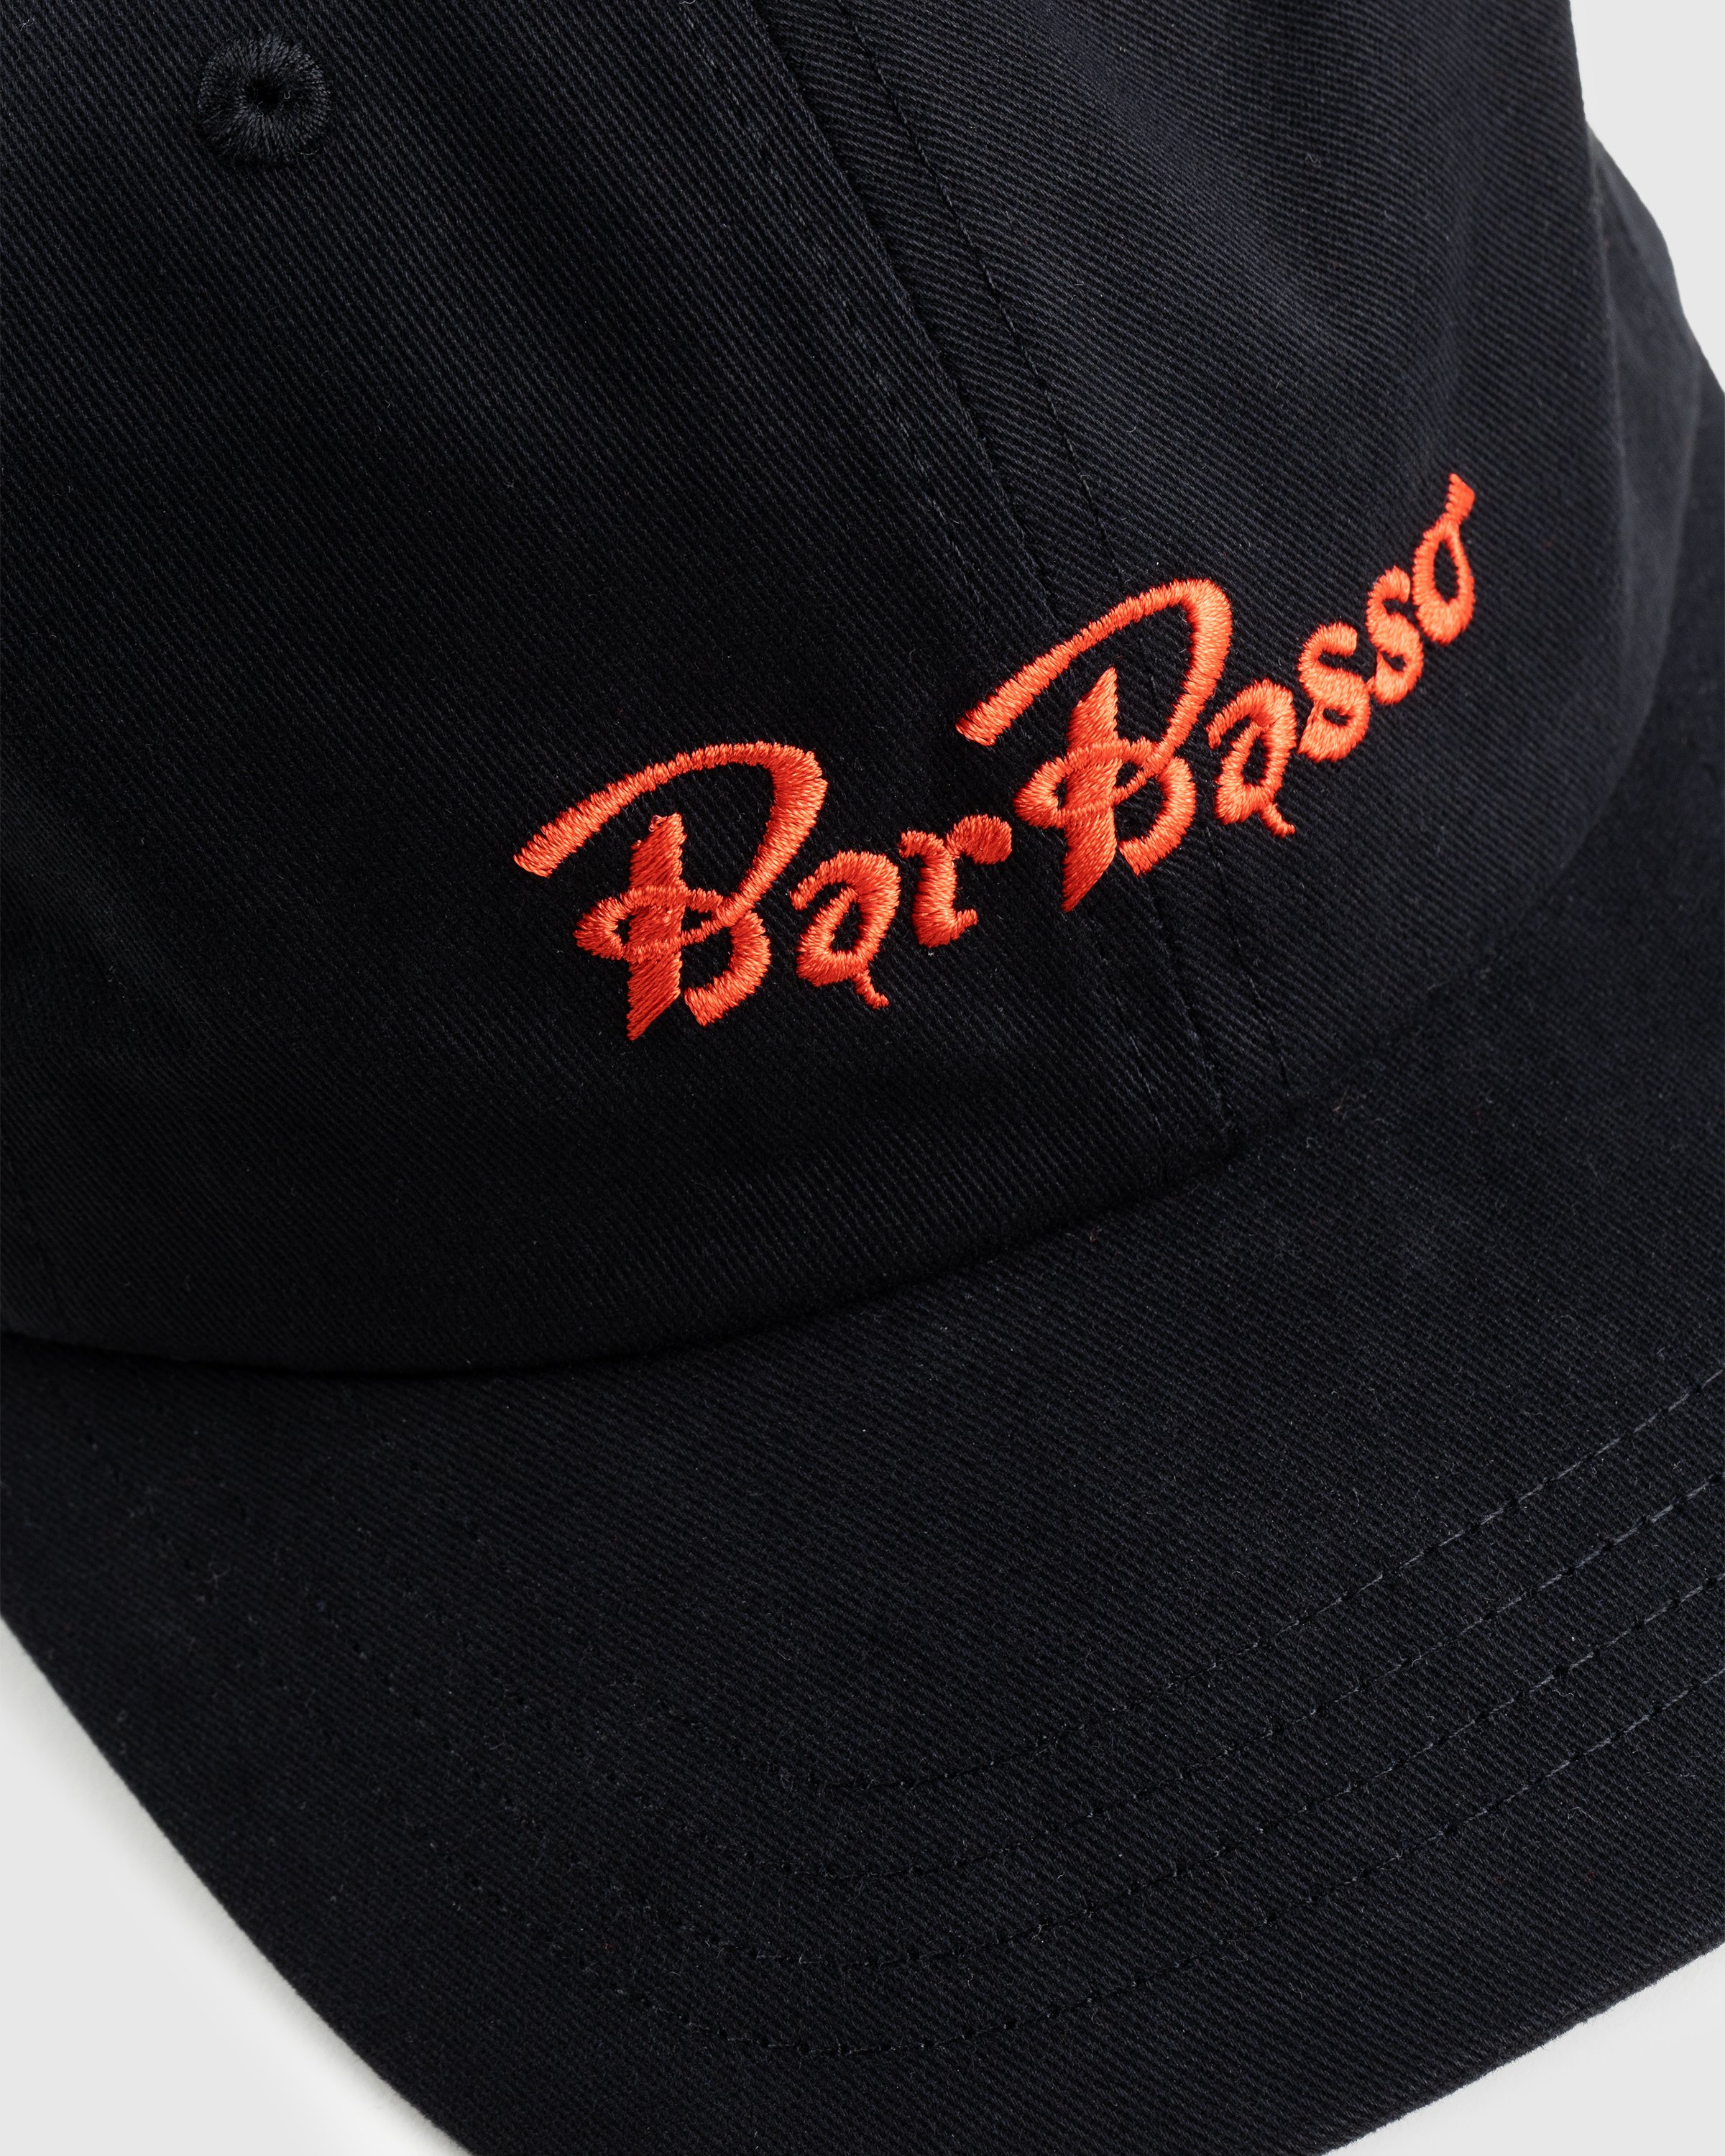 Bar Basso x Highsnobiety - Logo Cap Black - Accessories - Black - Image 4